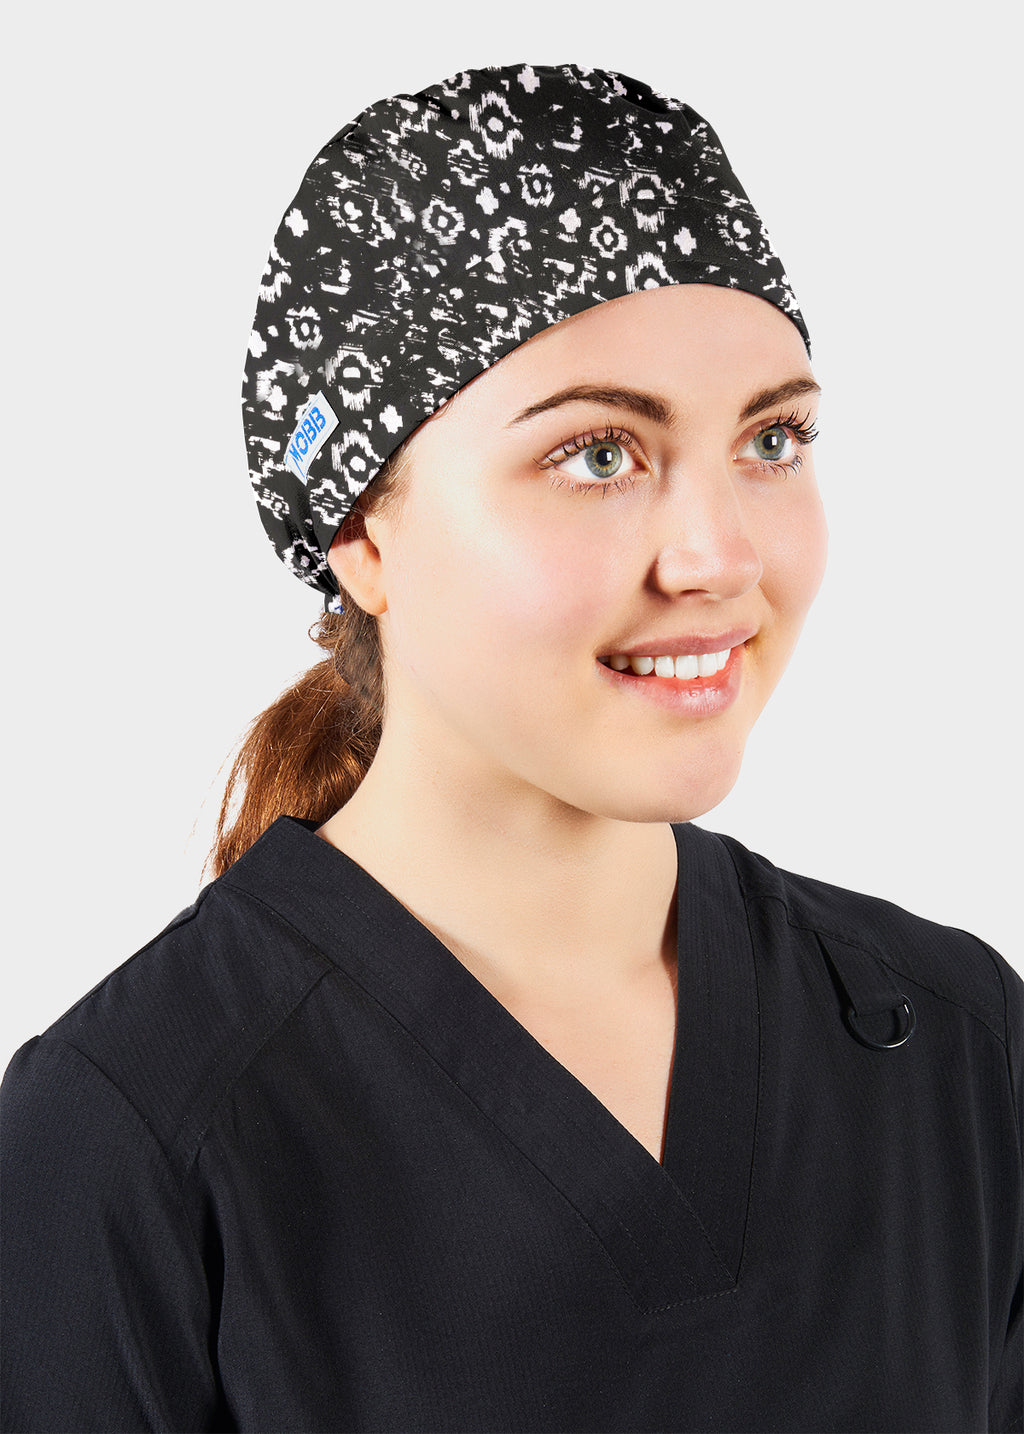 Product - MOBB Deluxe Surgeon's Cap